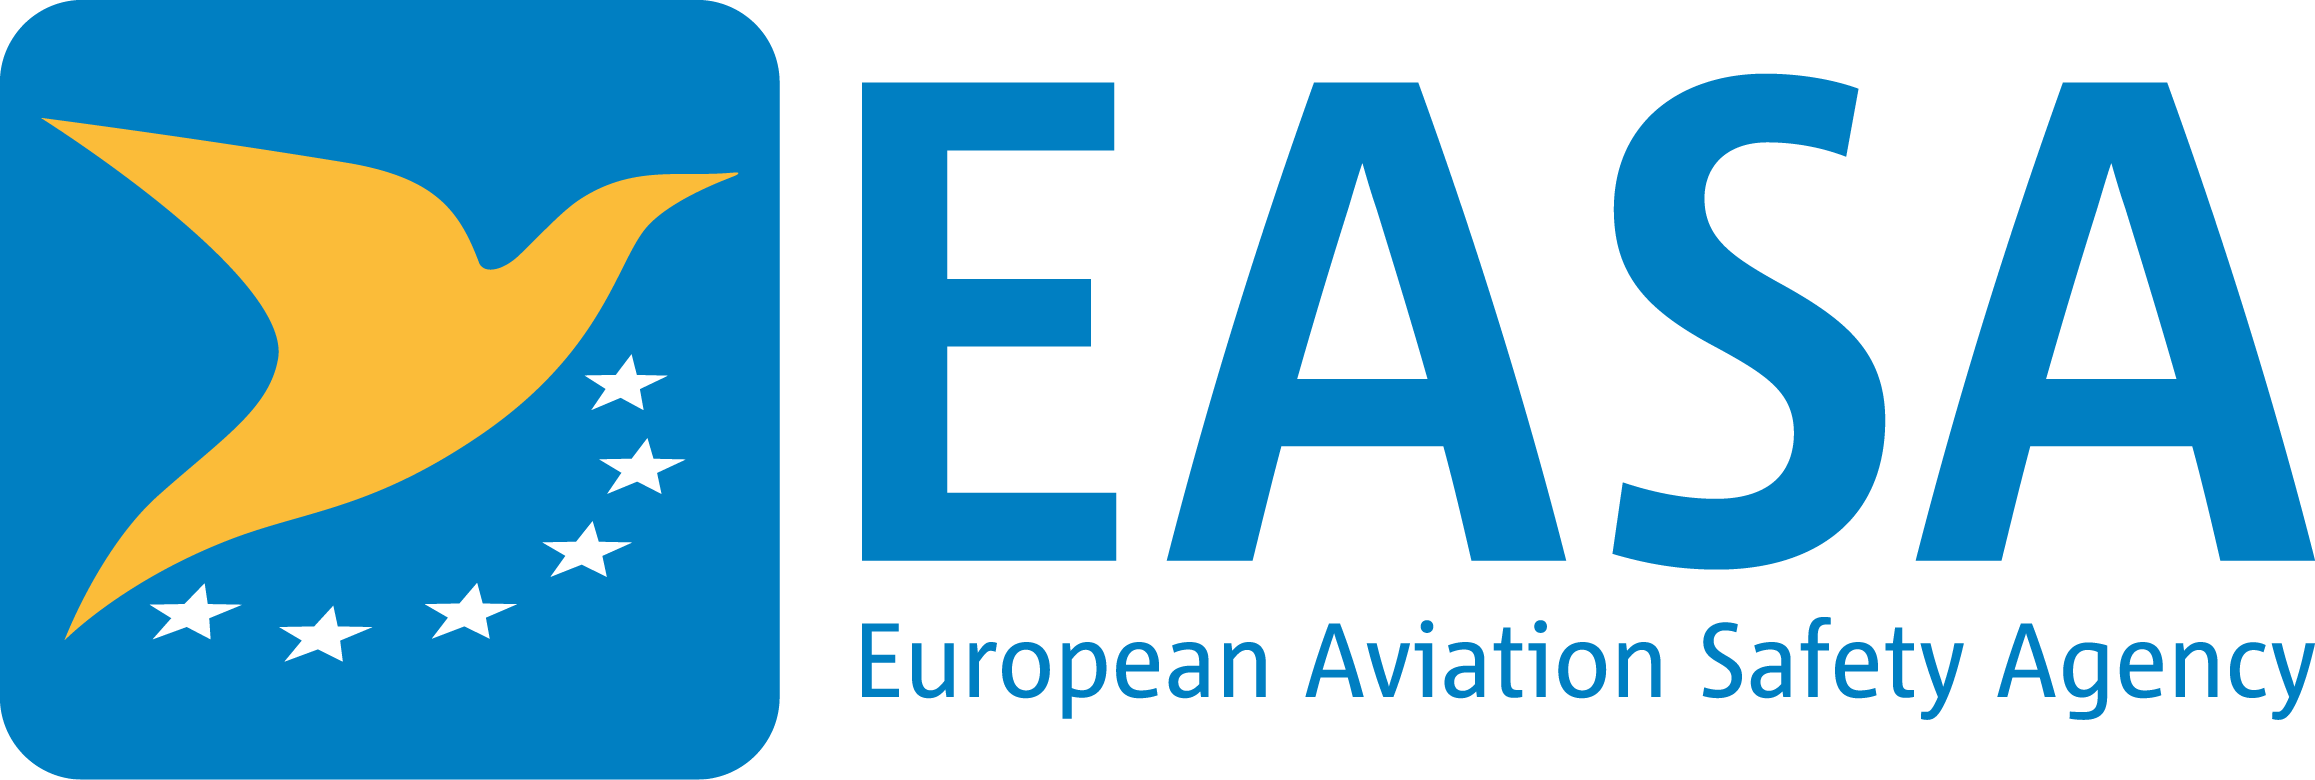 EUROPEAN AVIATION SAFETY AGENCY (EASA)